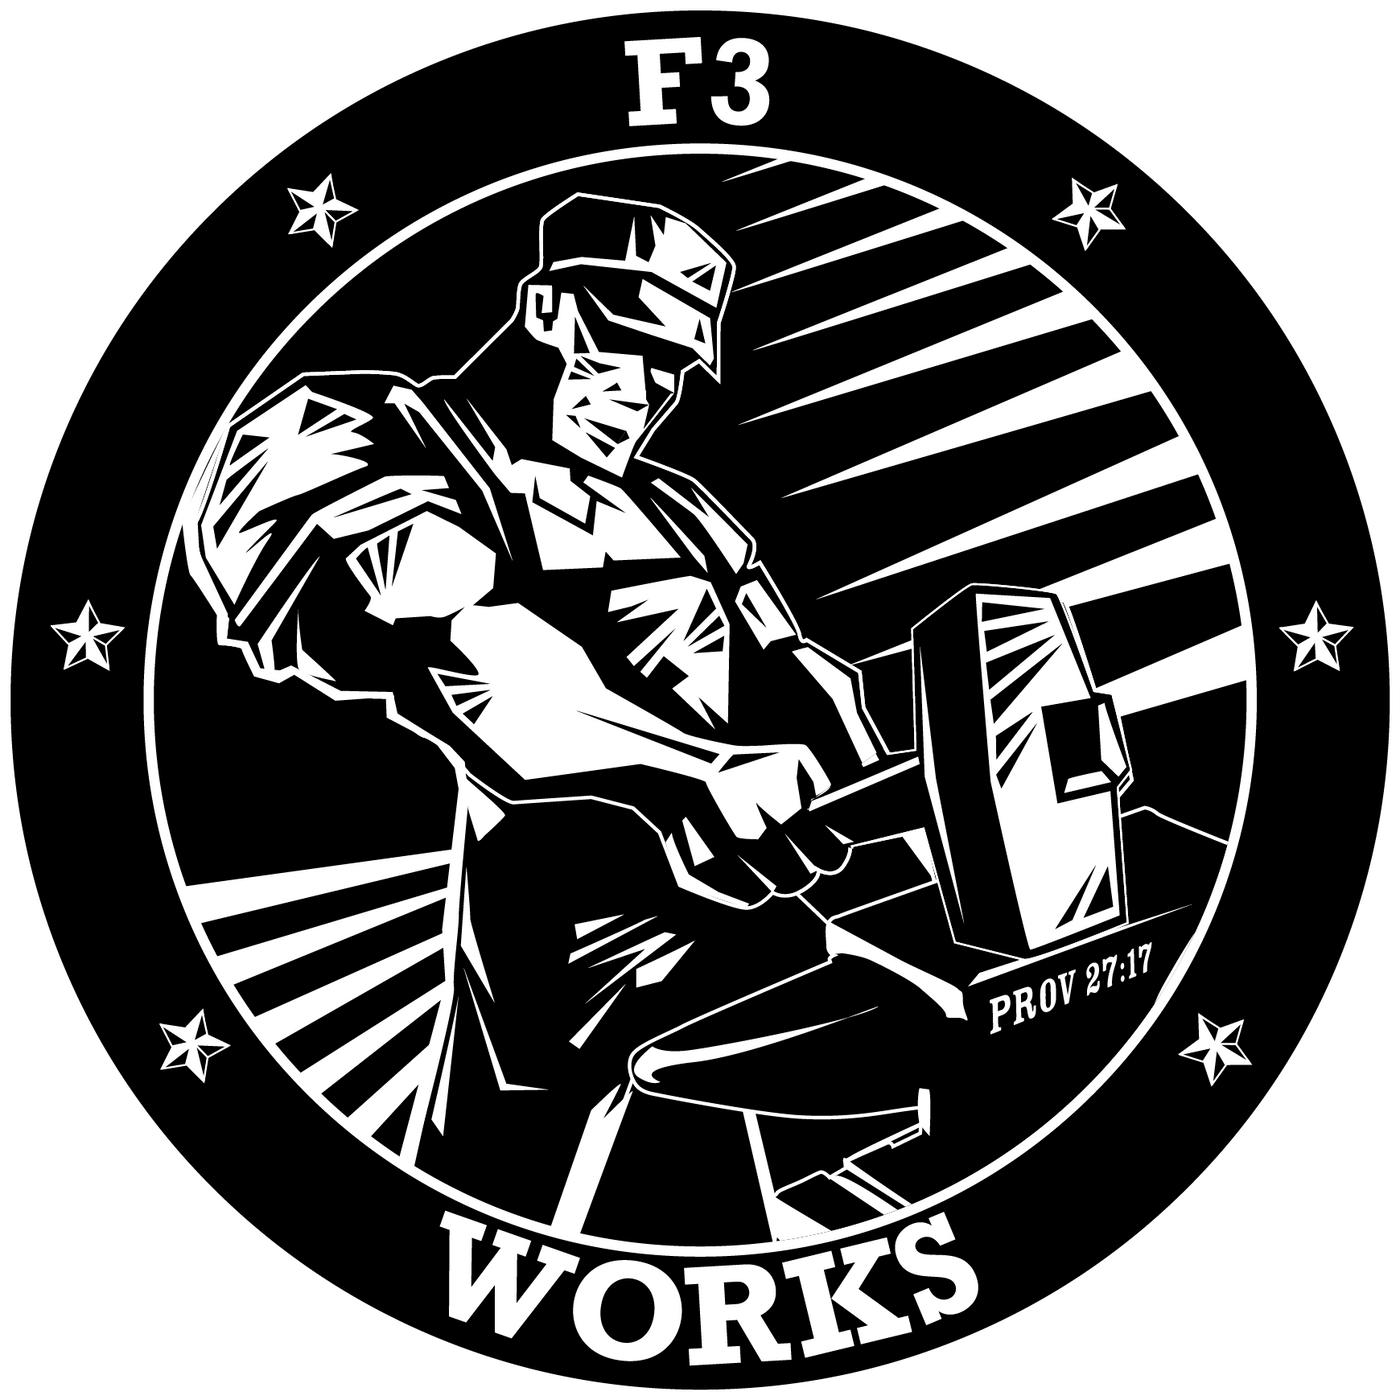 F3 Works Pre-Order June 2021